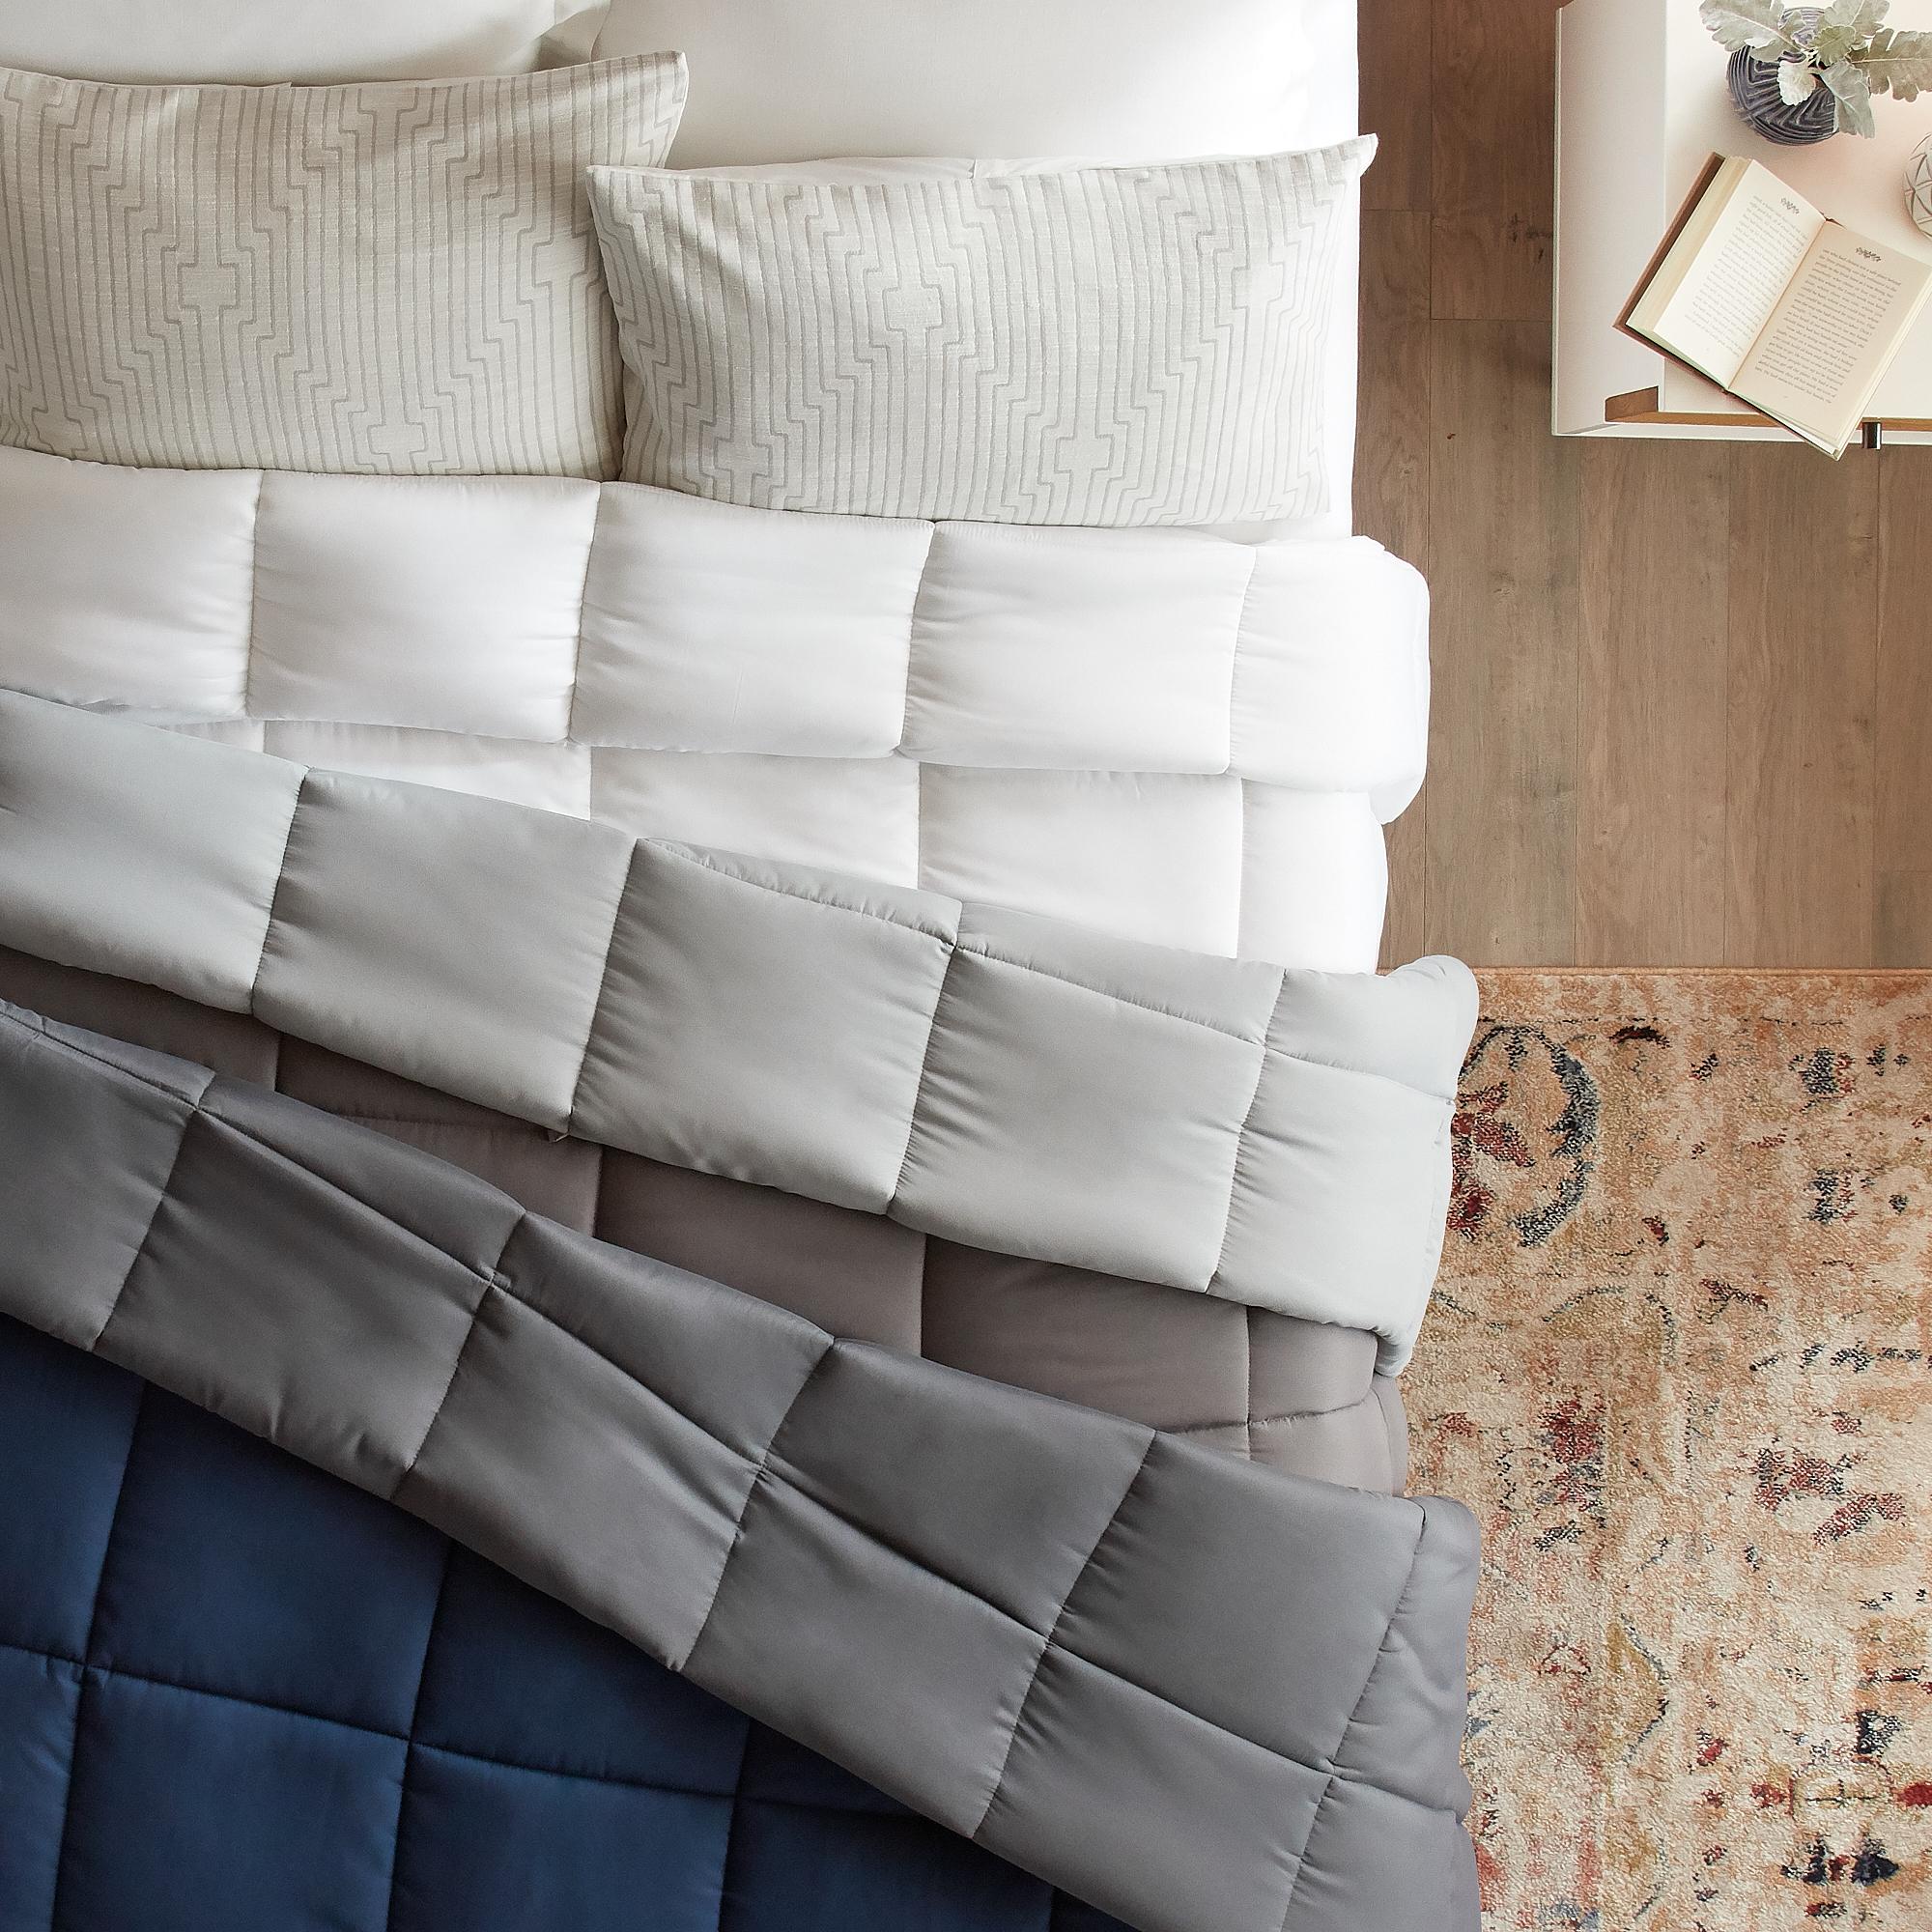 Rest Haven All-Season Down Alternative Comforter, Oversized King, White - image 1 of 14